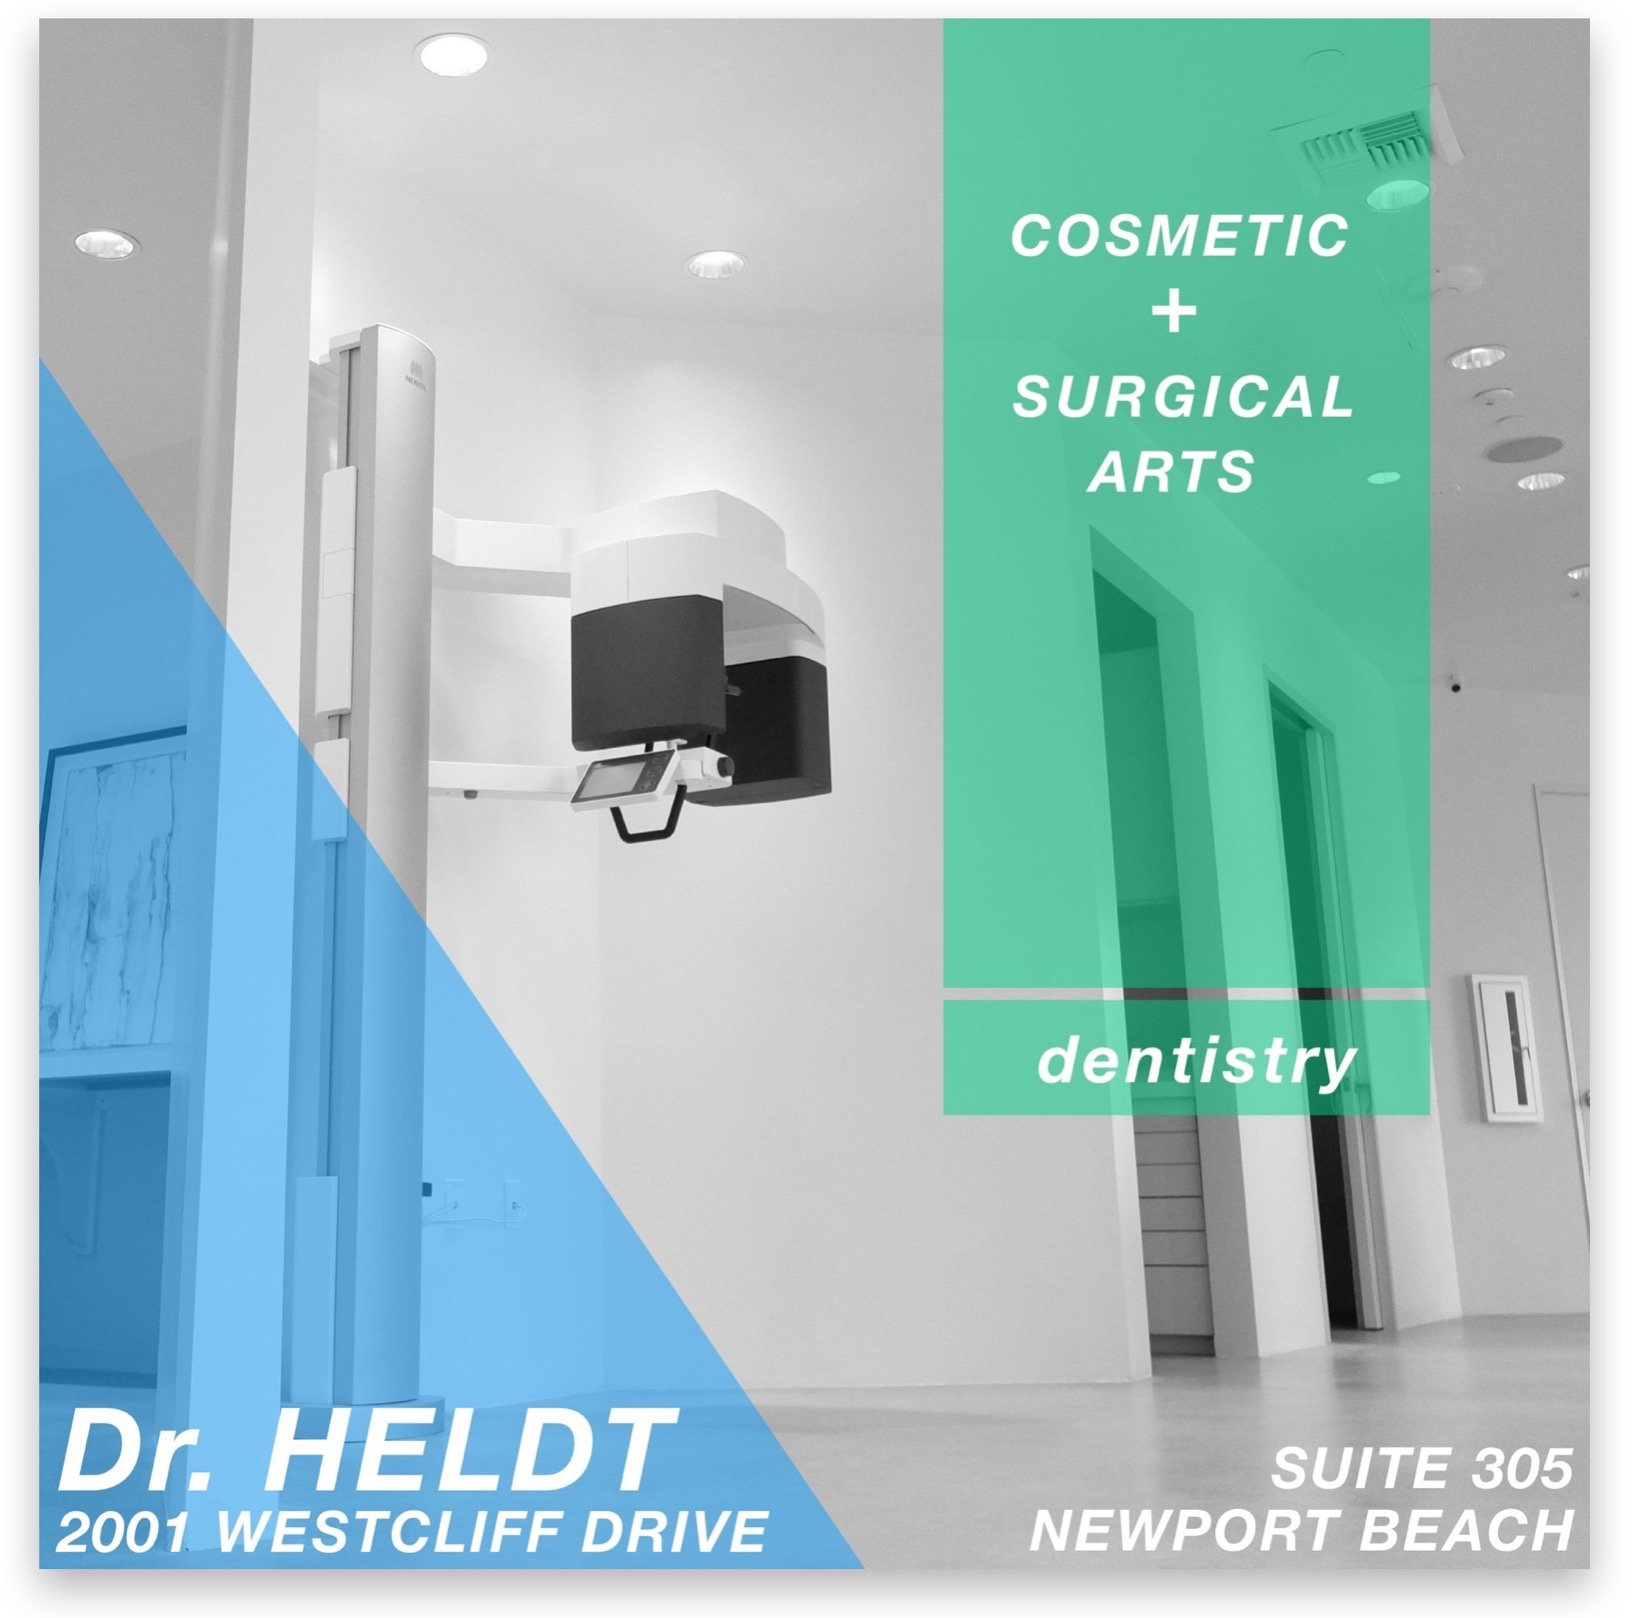 State-of-the-Art Dental Office Newport Beach by Jeremy Heldt, DDS: Veneers, Dental Implants, All-on-4, Cosmetic Dentistry